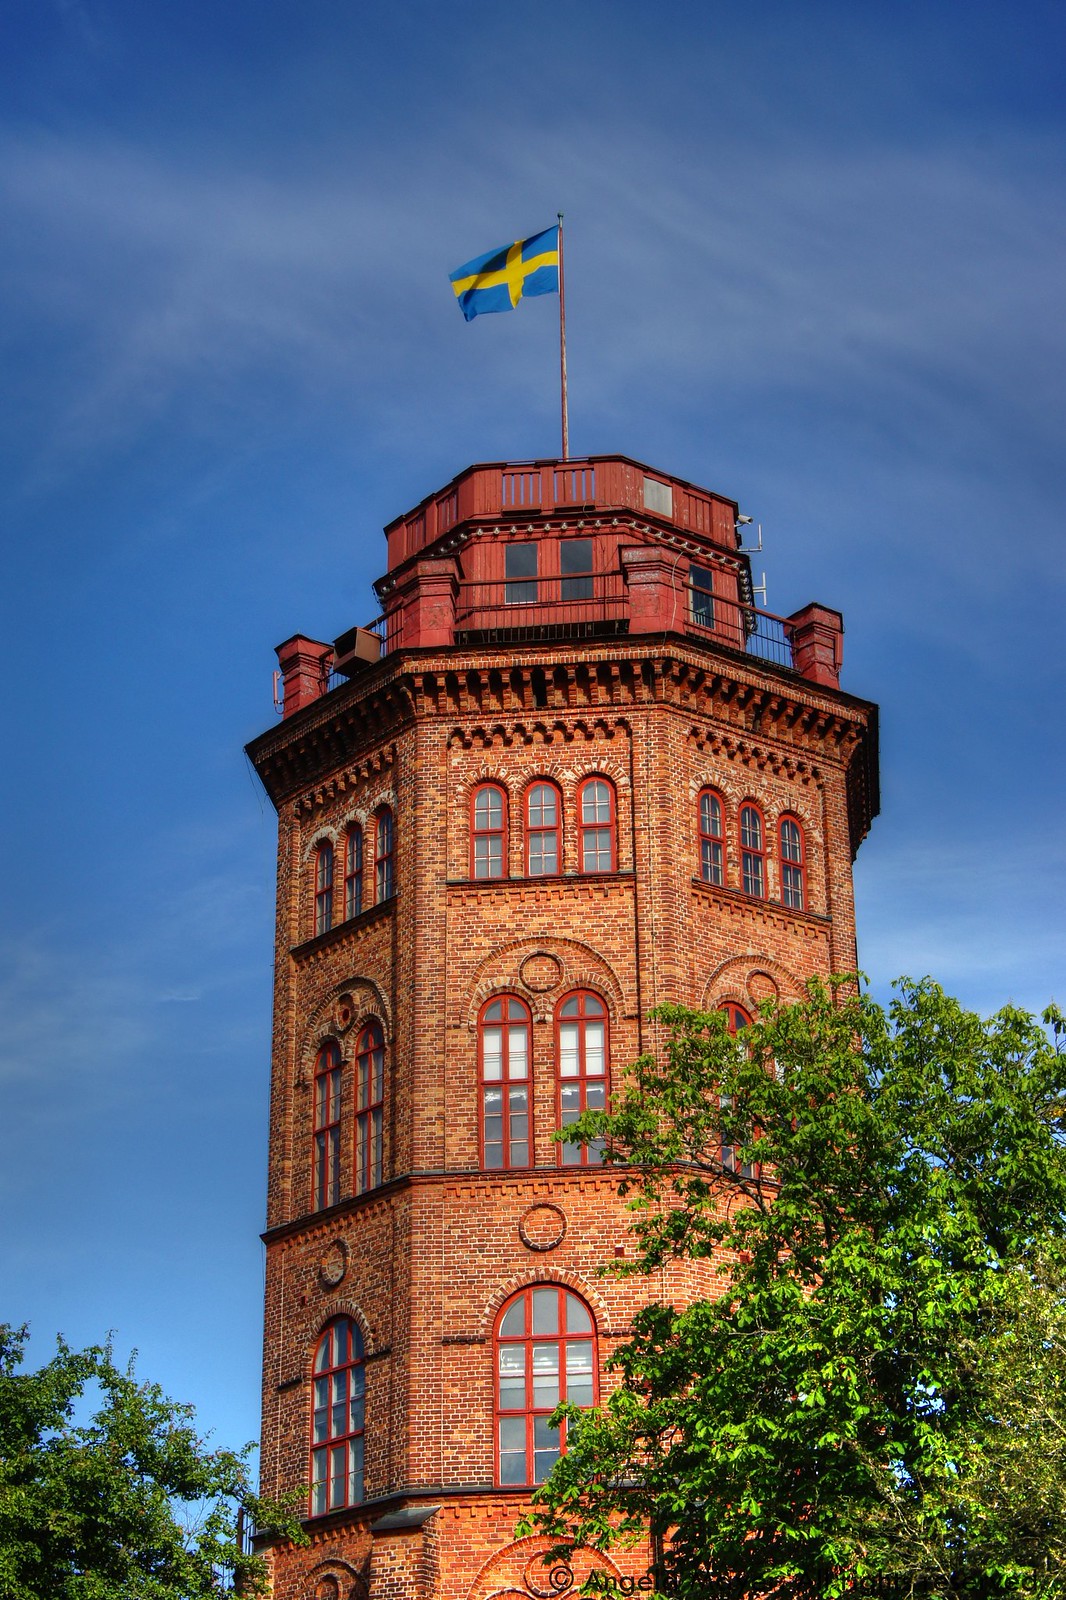 Bredablick Tower - Skansen